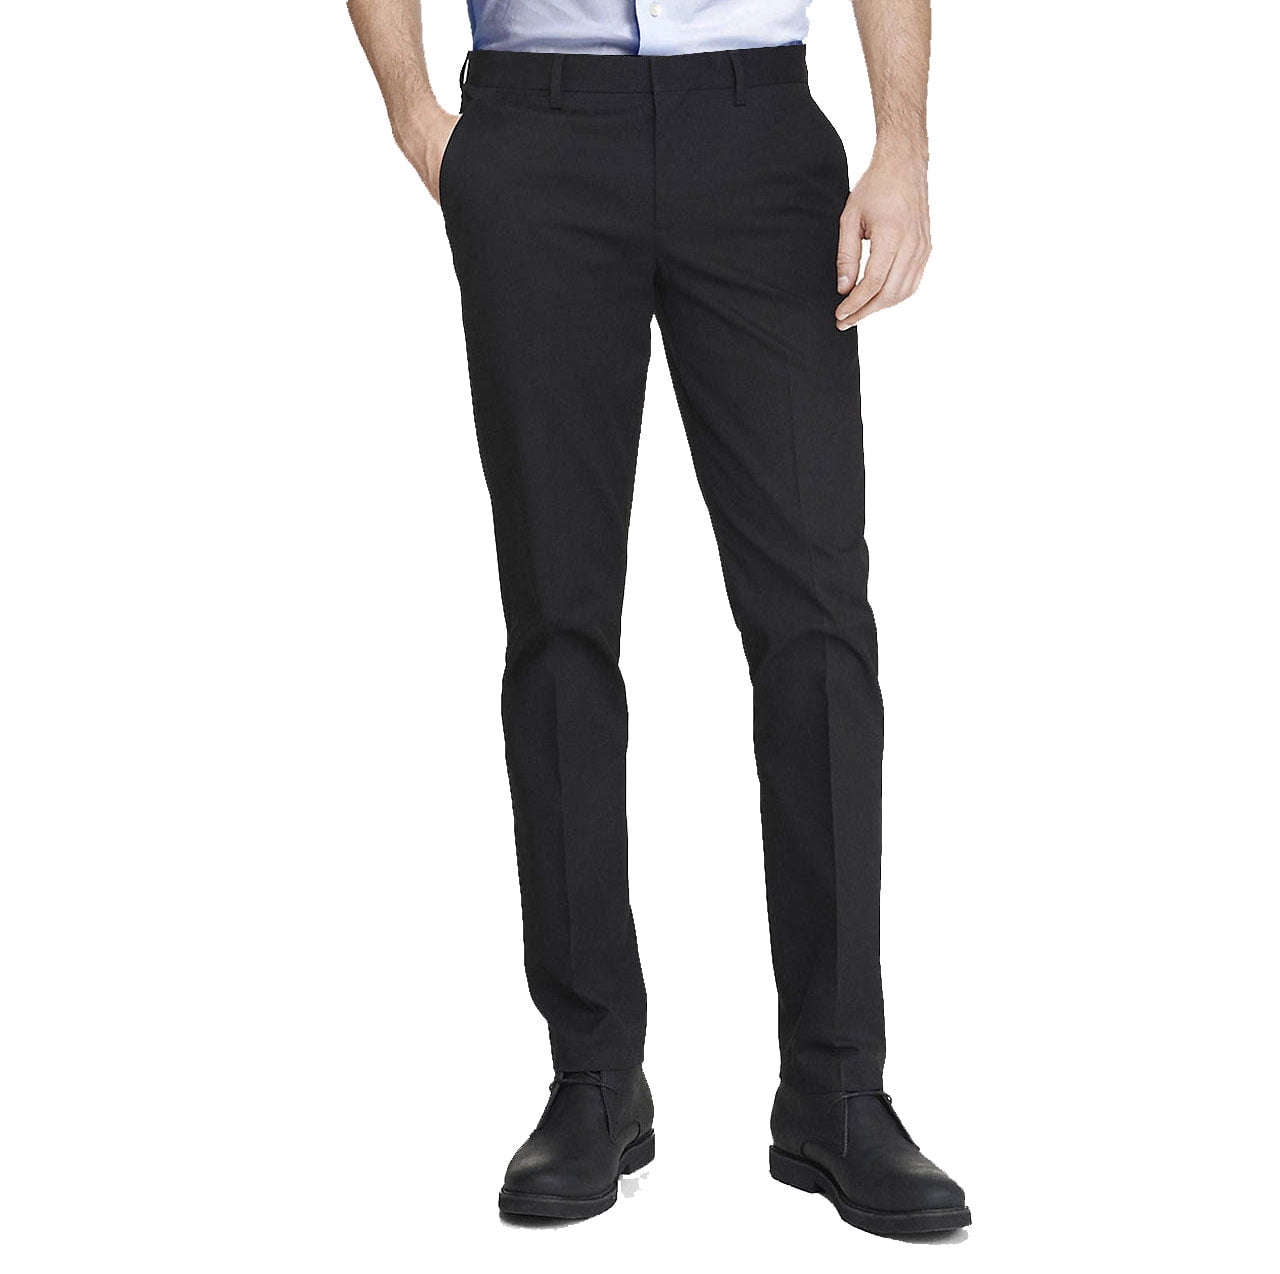 BRITCHES Samtex Mens Linen Blend Casual Dress Pants - BRAND NEW - 32 - Tan  | eBay